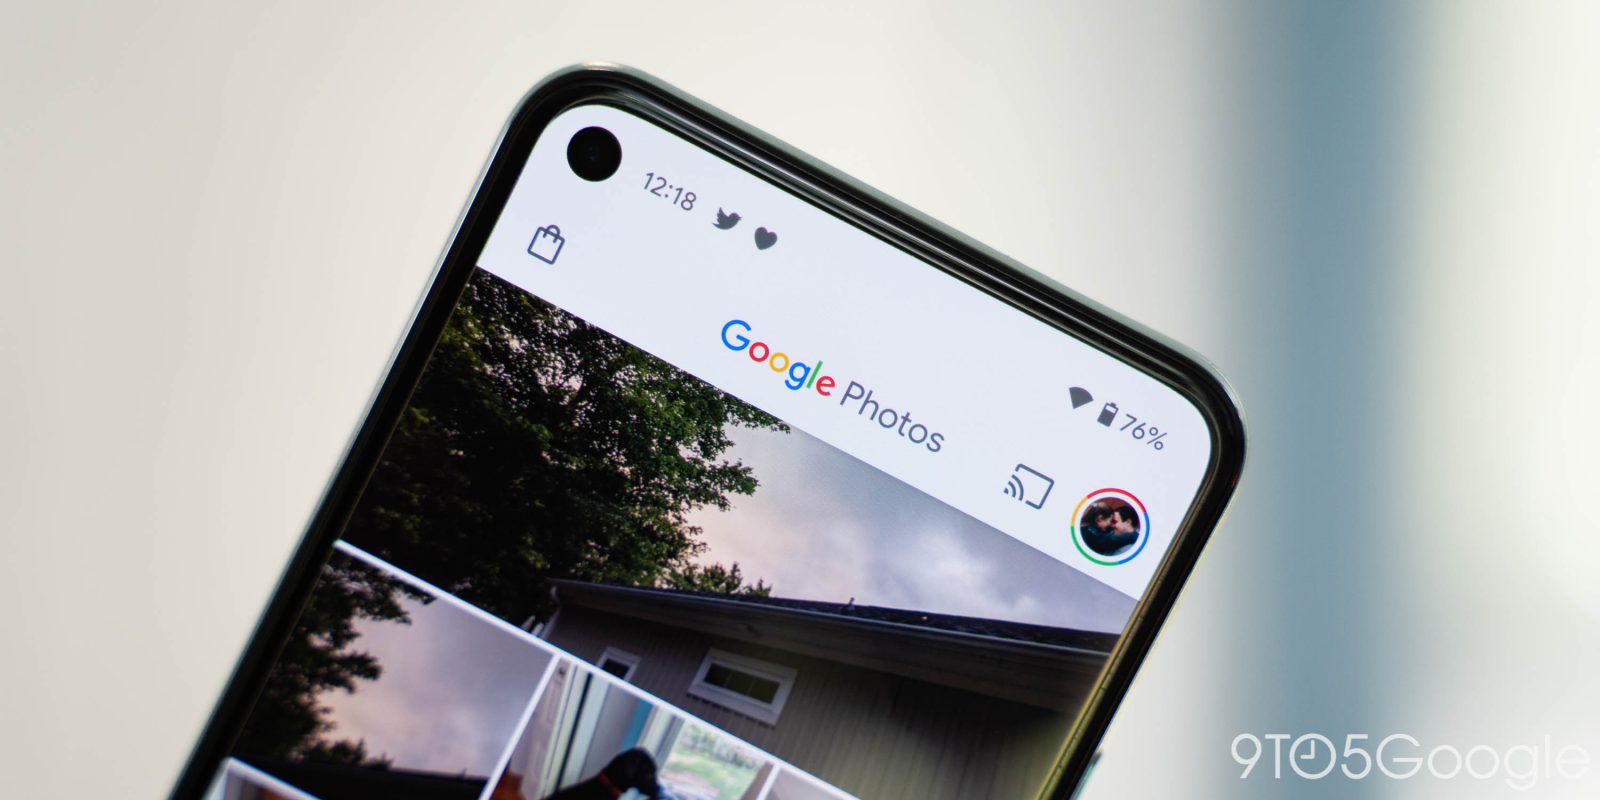 Google Photos frees up storage space